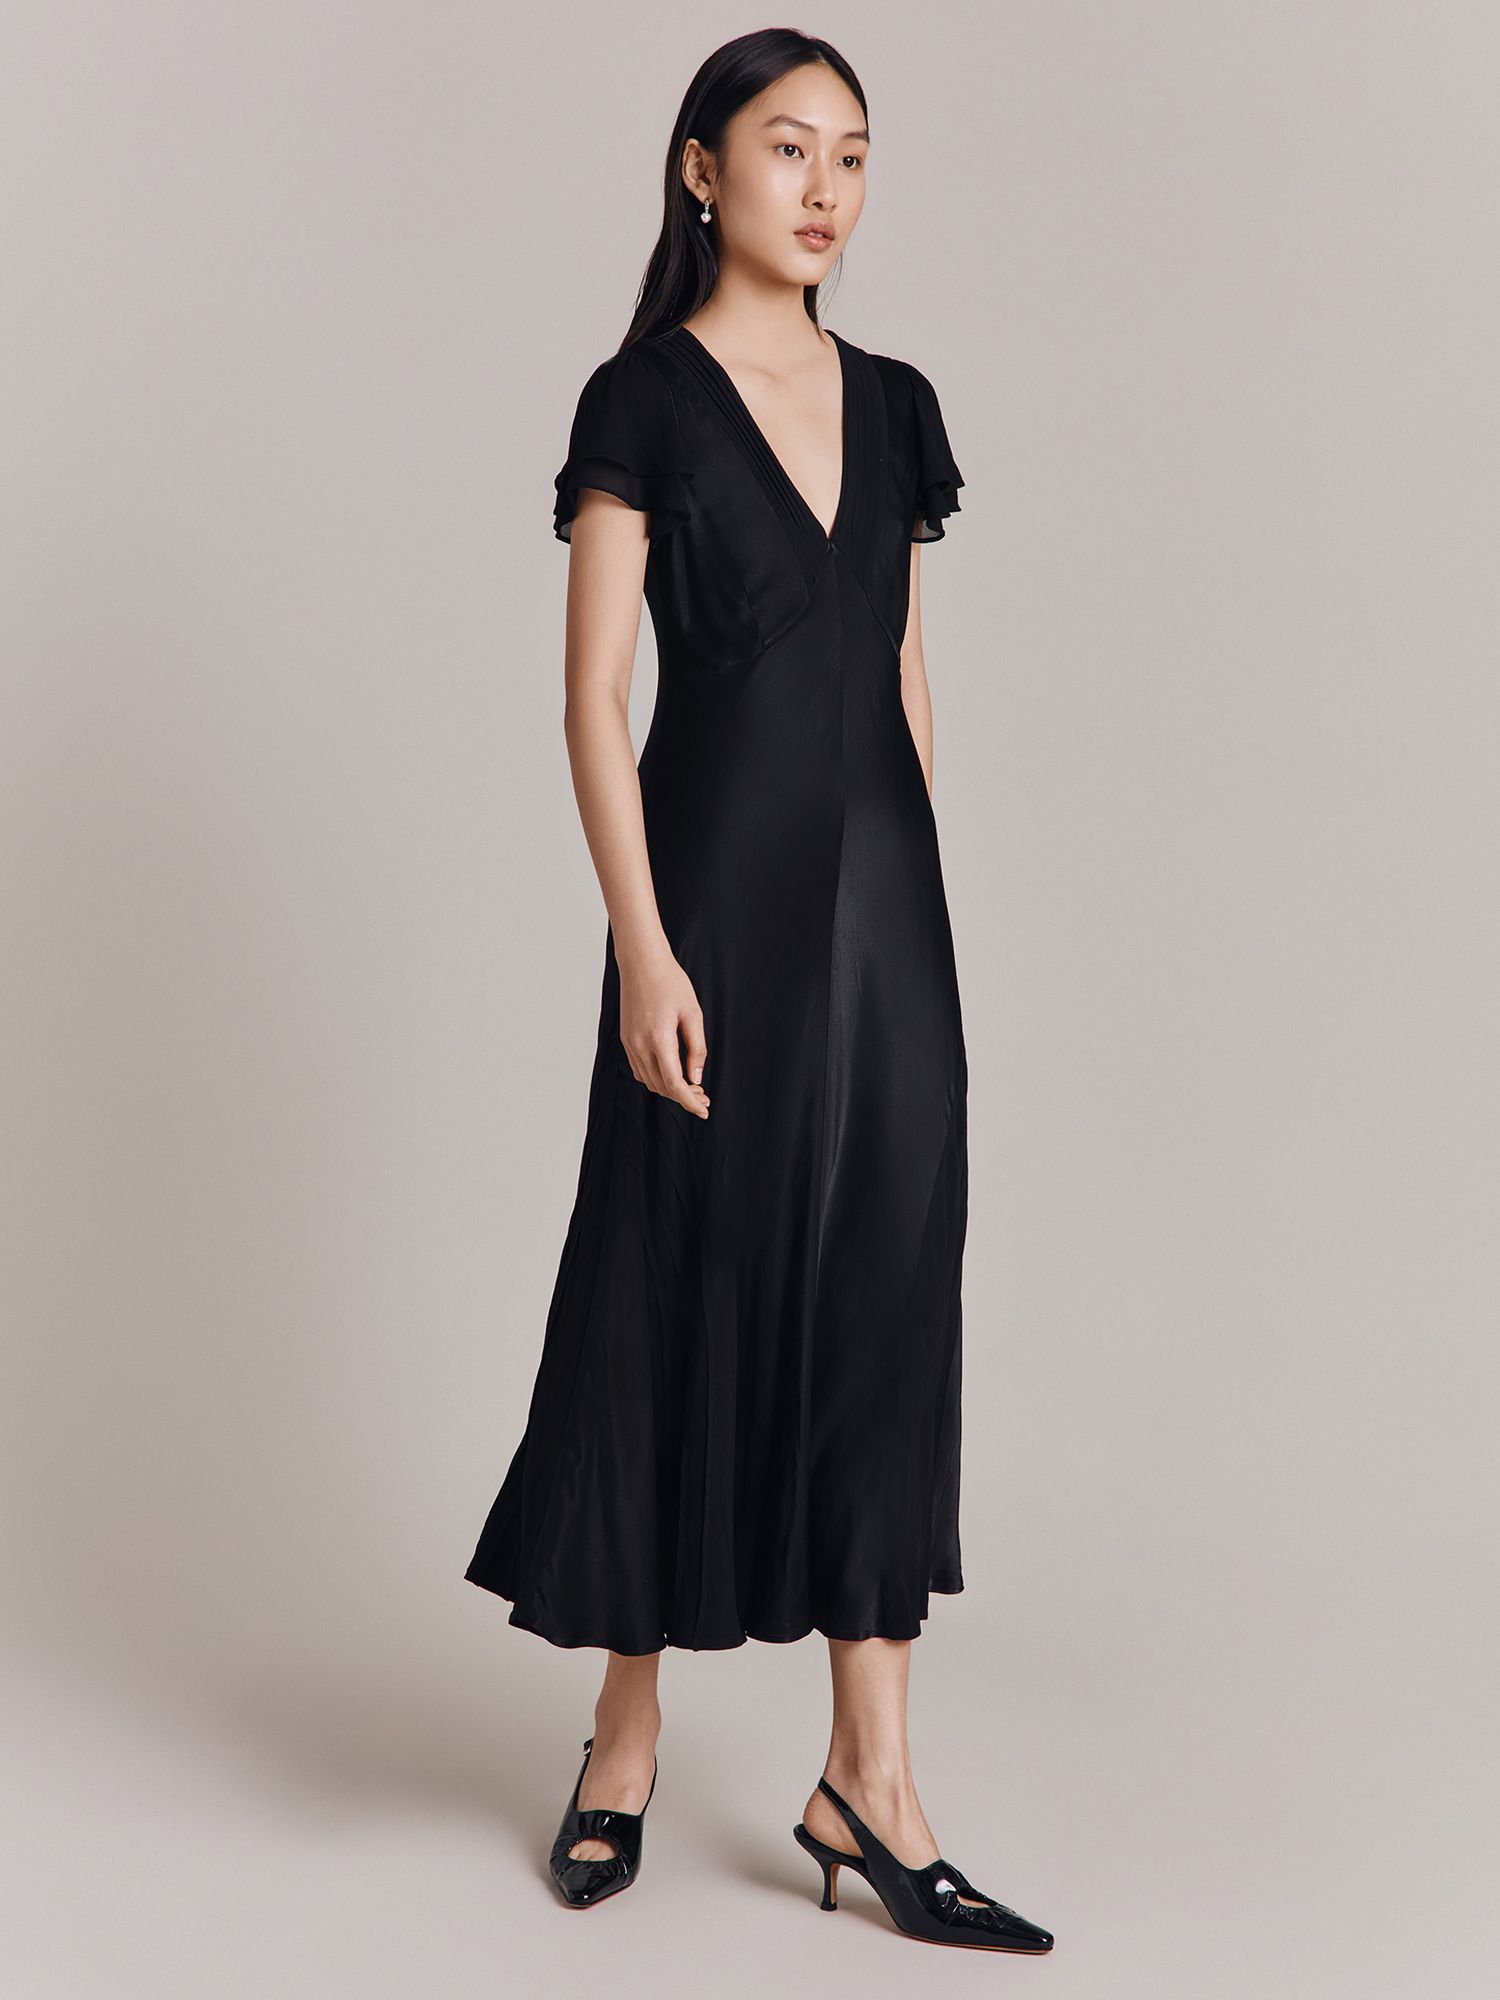 Ghost Olivia Ecovero Midi Dress, Black at John Lewis & Partners